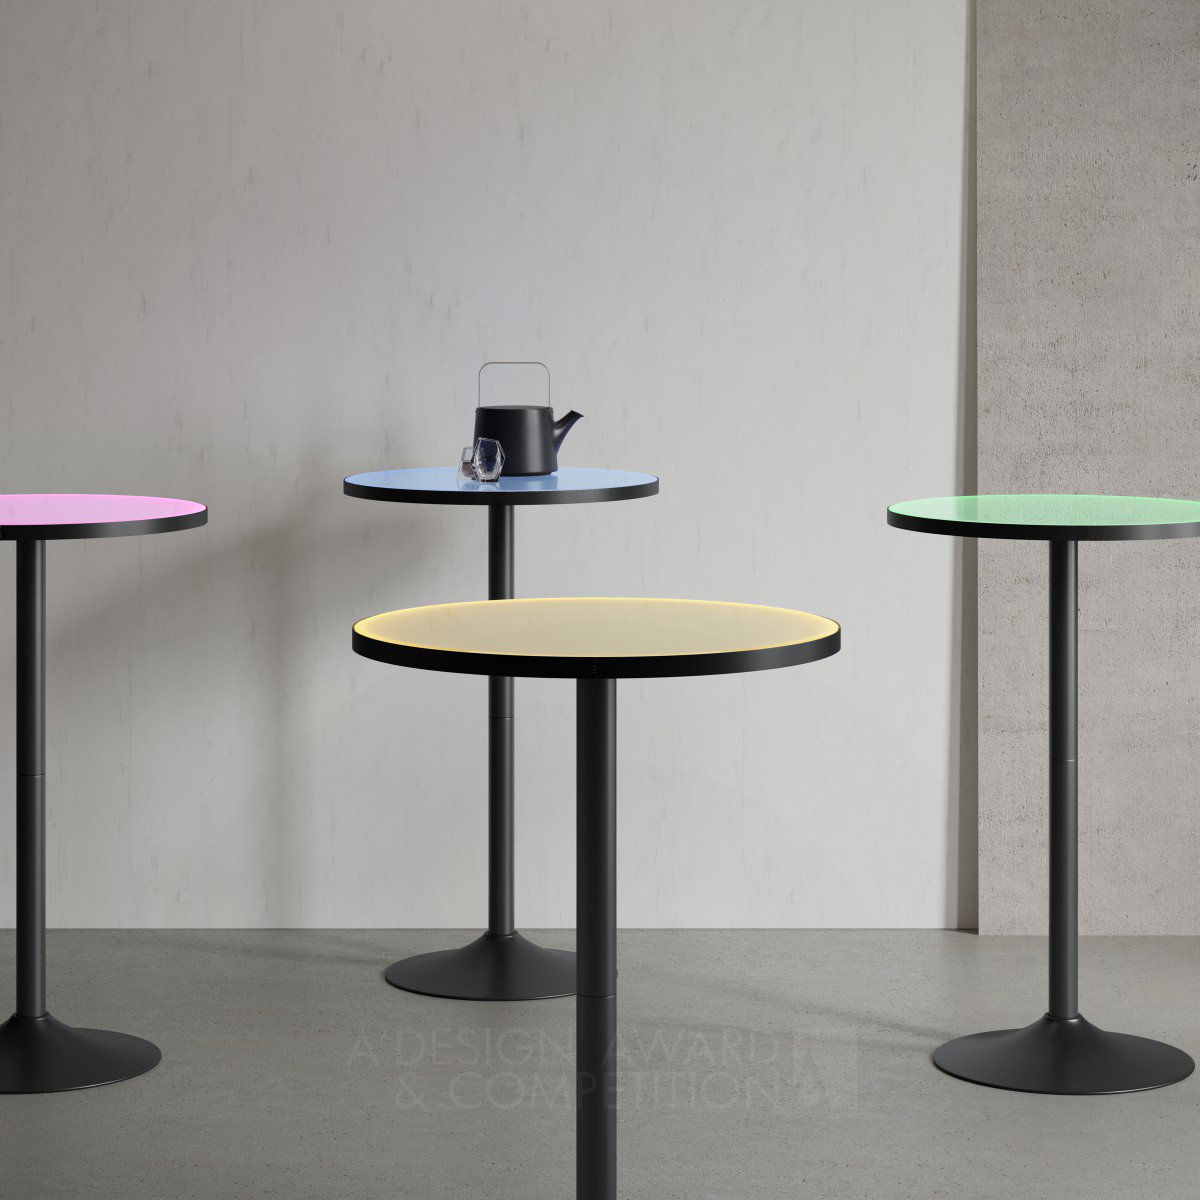 Ziel Home Furnishing Technology Co., Ltd wins Bronze at the prestigious A' Furniture Design Award with Aurora Bar Table.